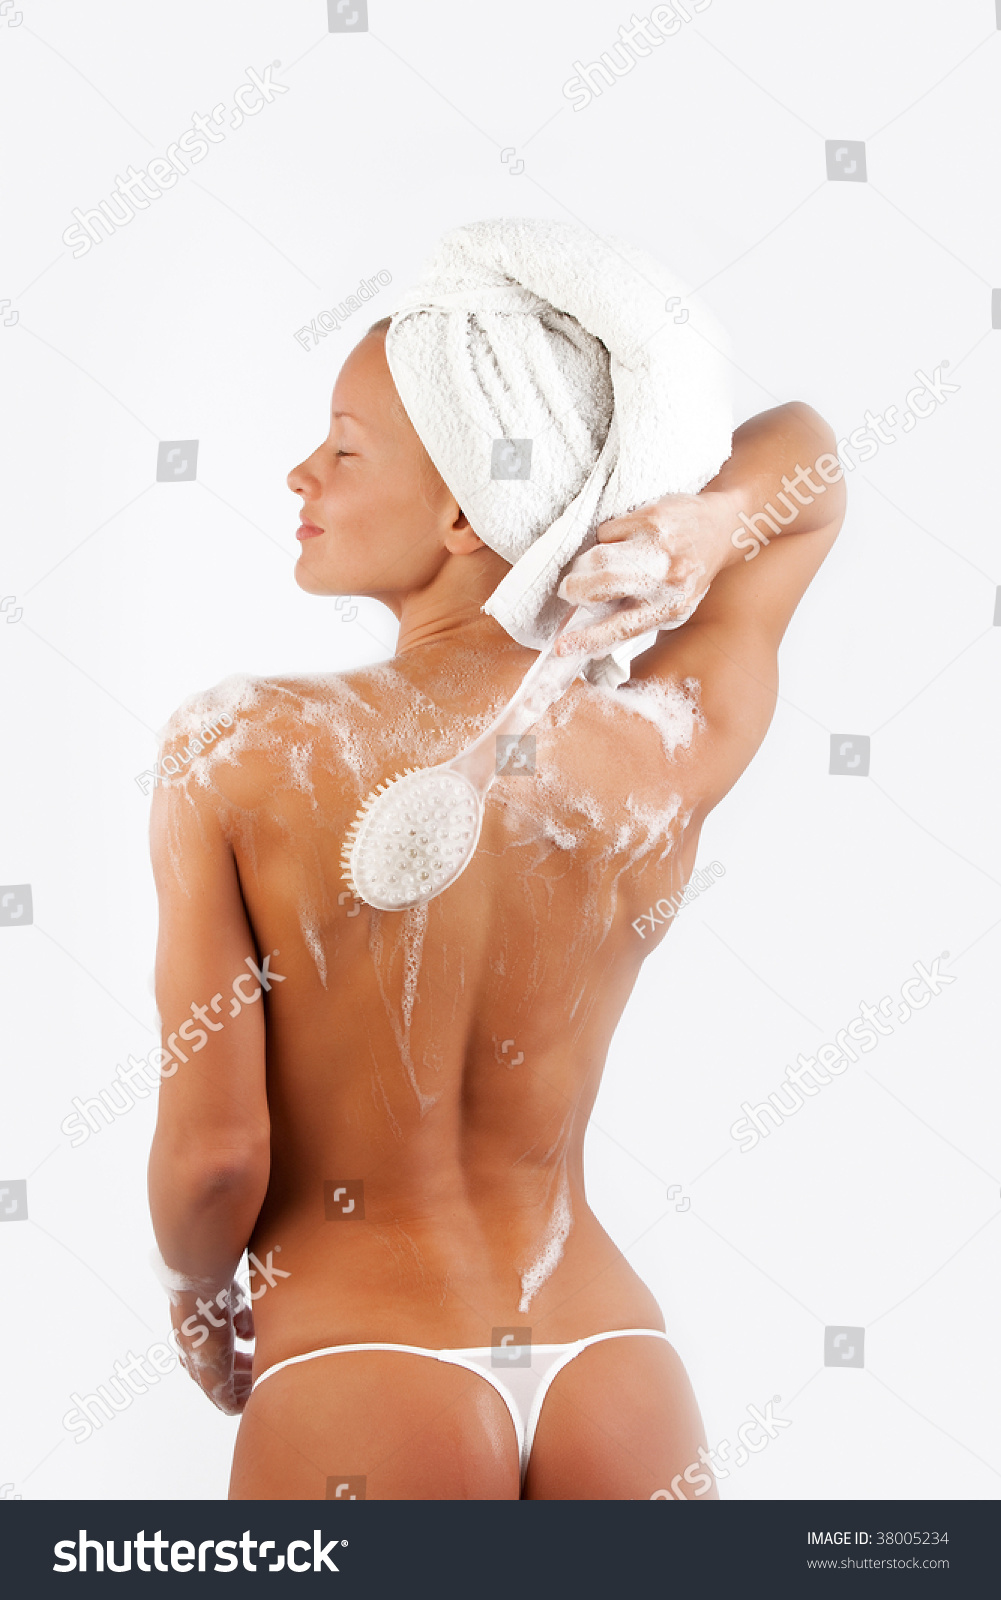 sexy women in shower